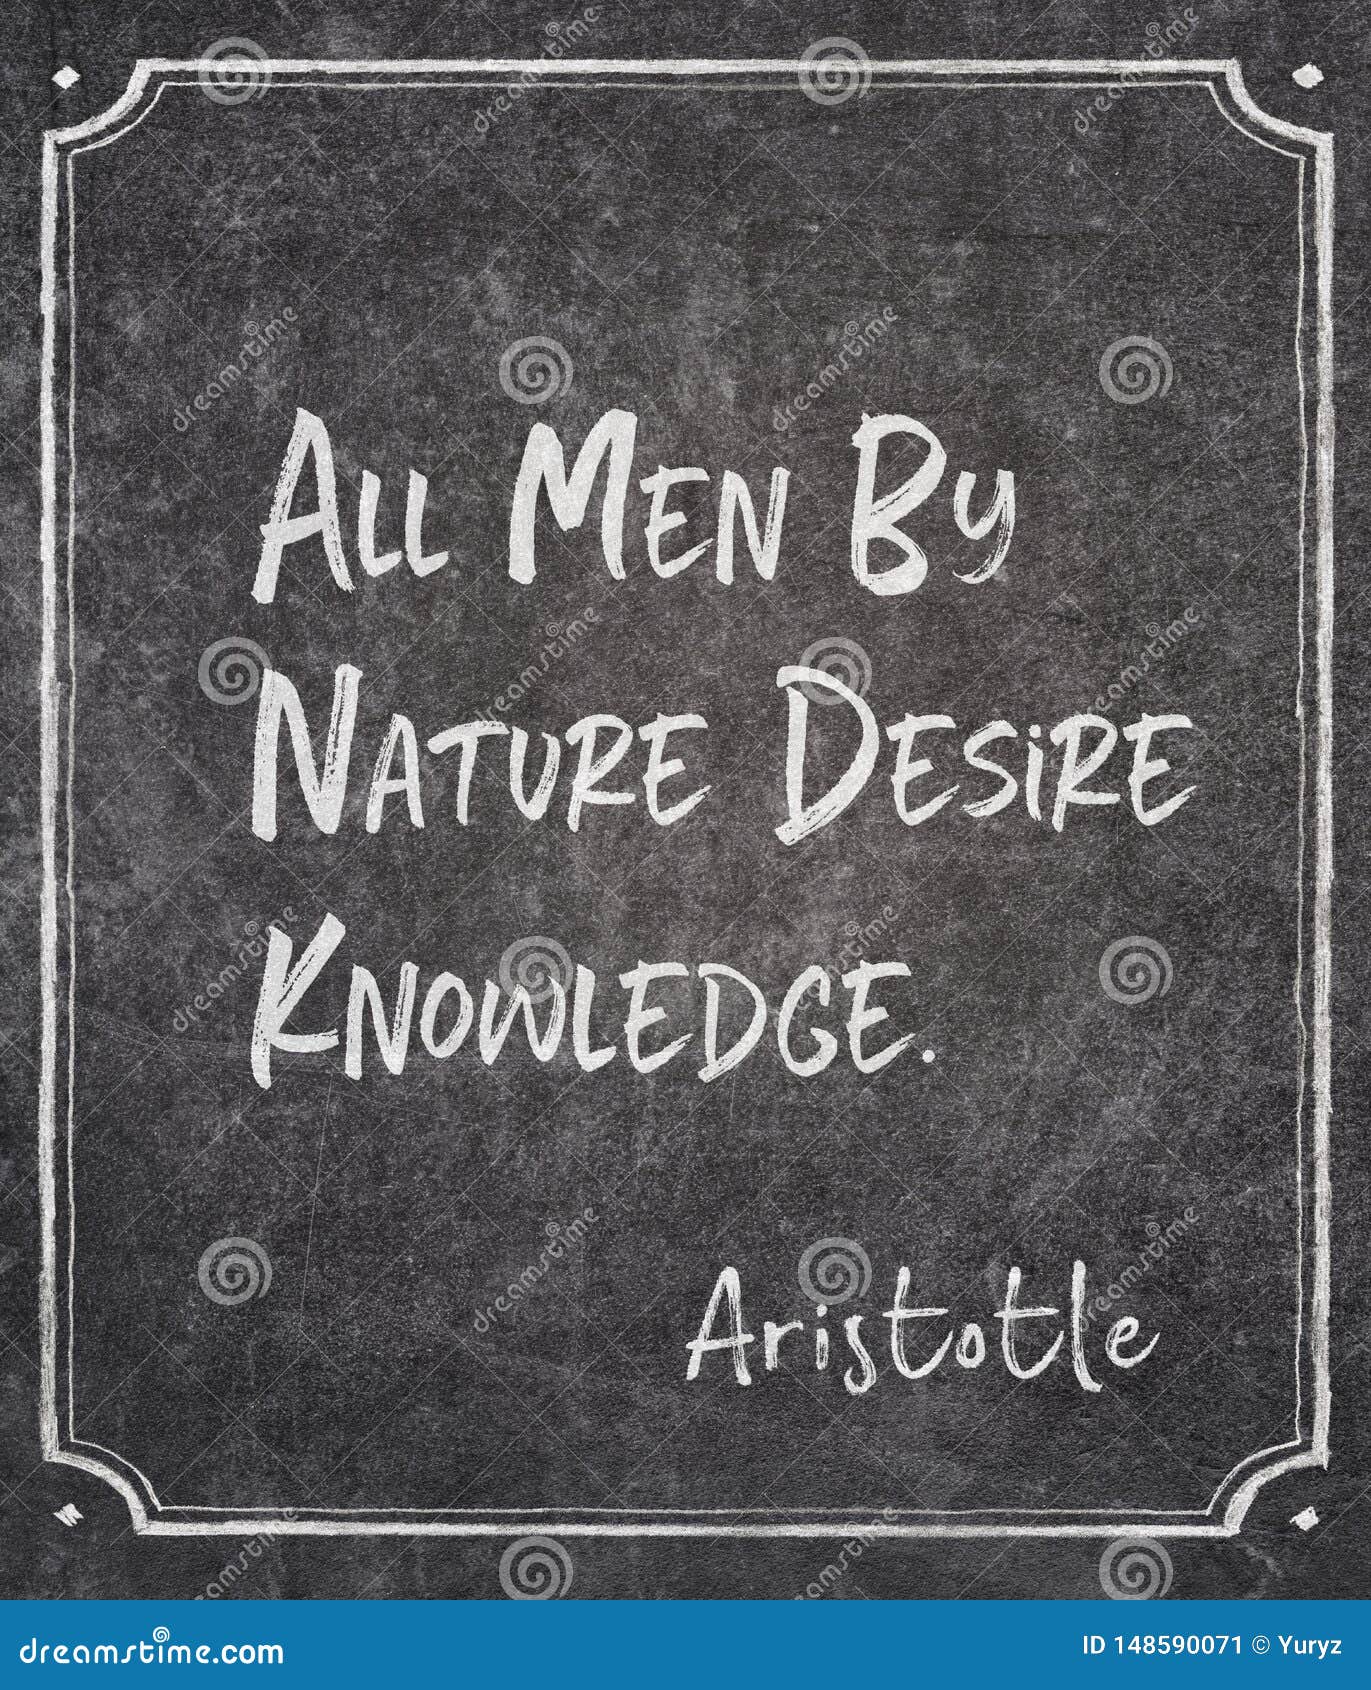 Desire knowledge image. Image of grunge - 148590071